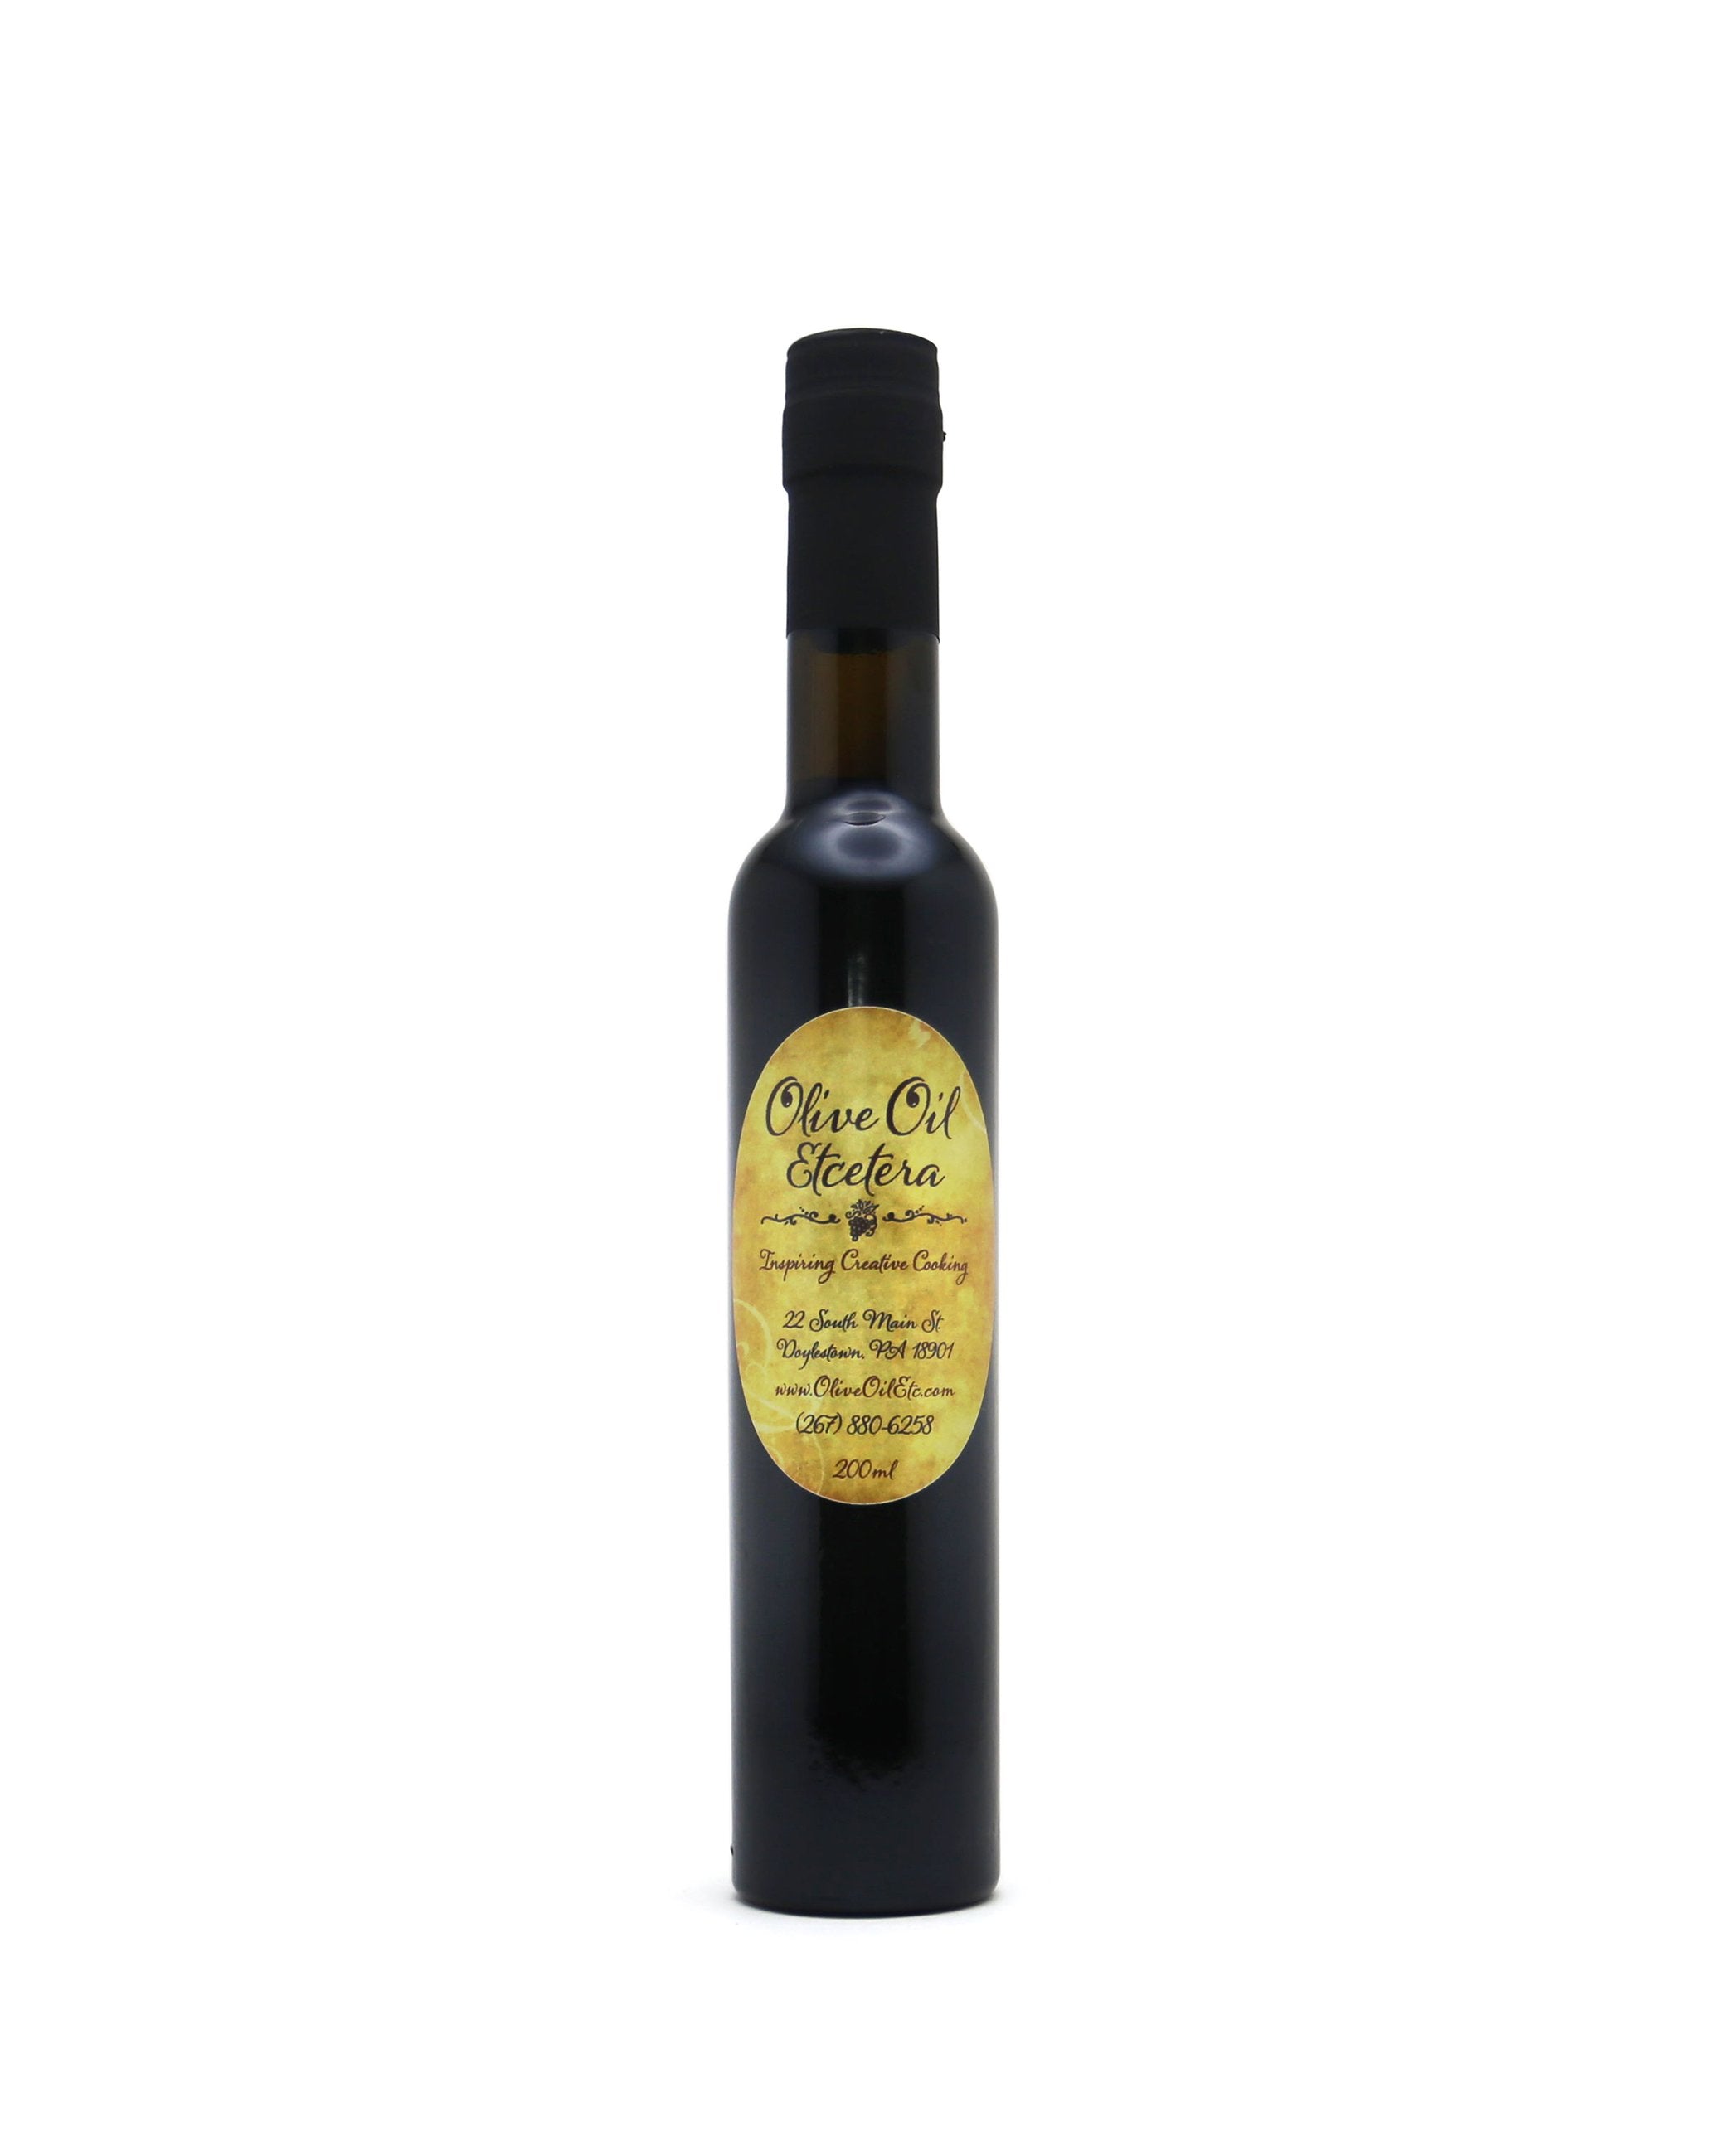 Garlic Herb Olive Oil - Olive Oil Etcetera - Bucks county's gourmet olive oil and vinegar shop